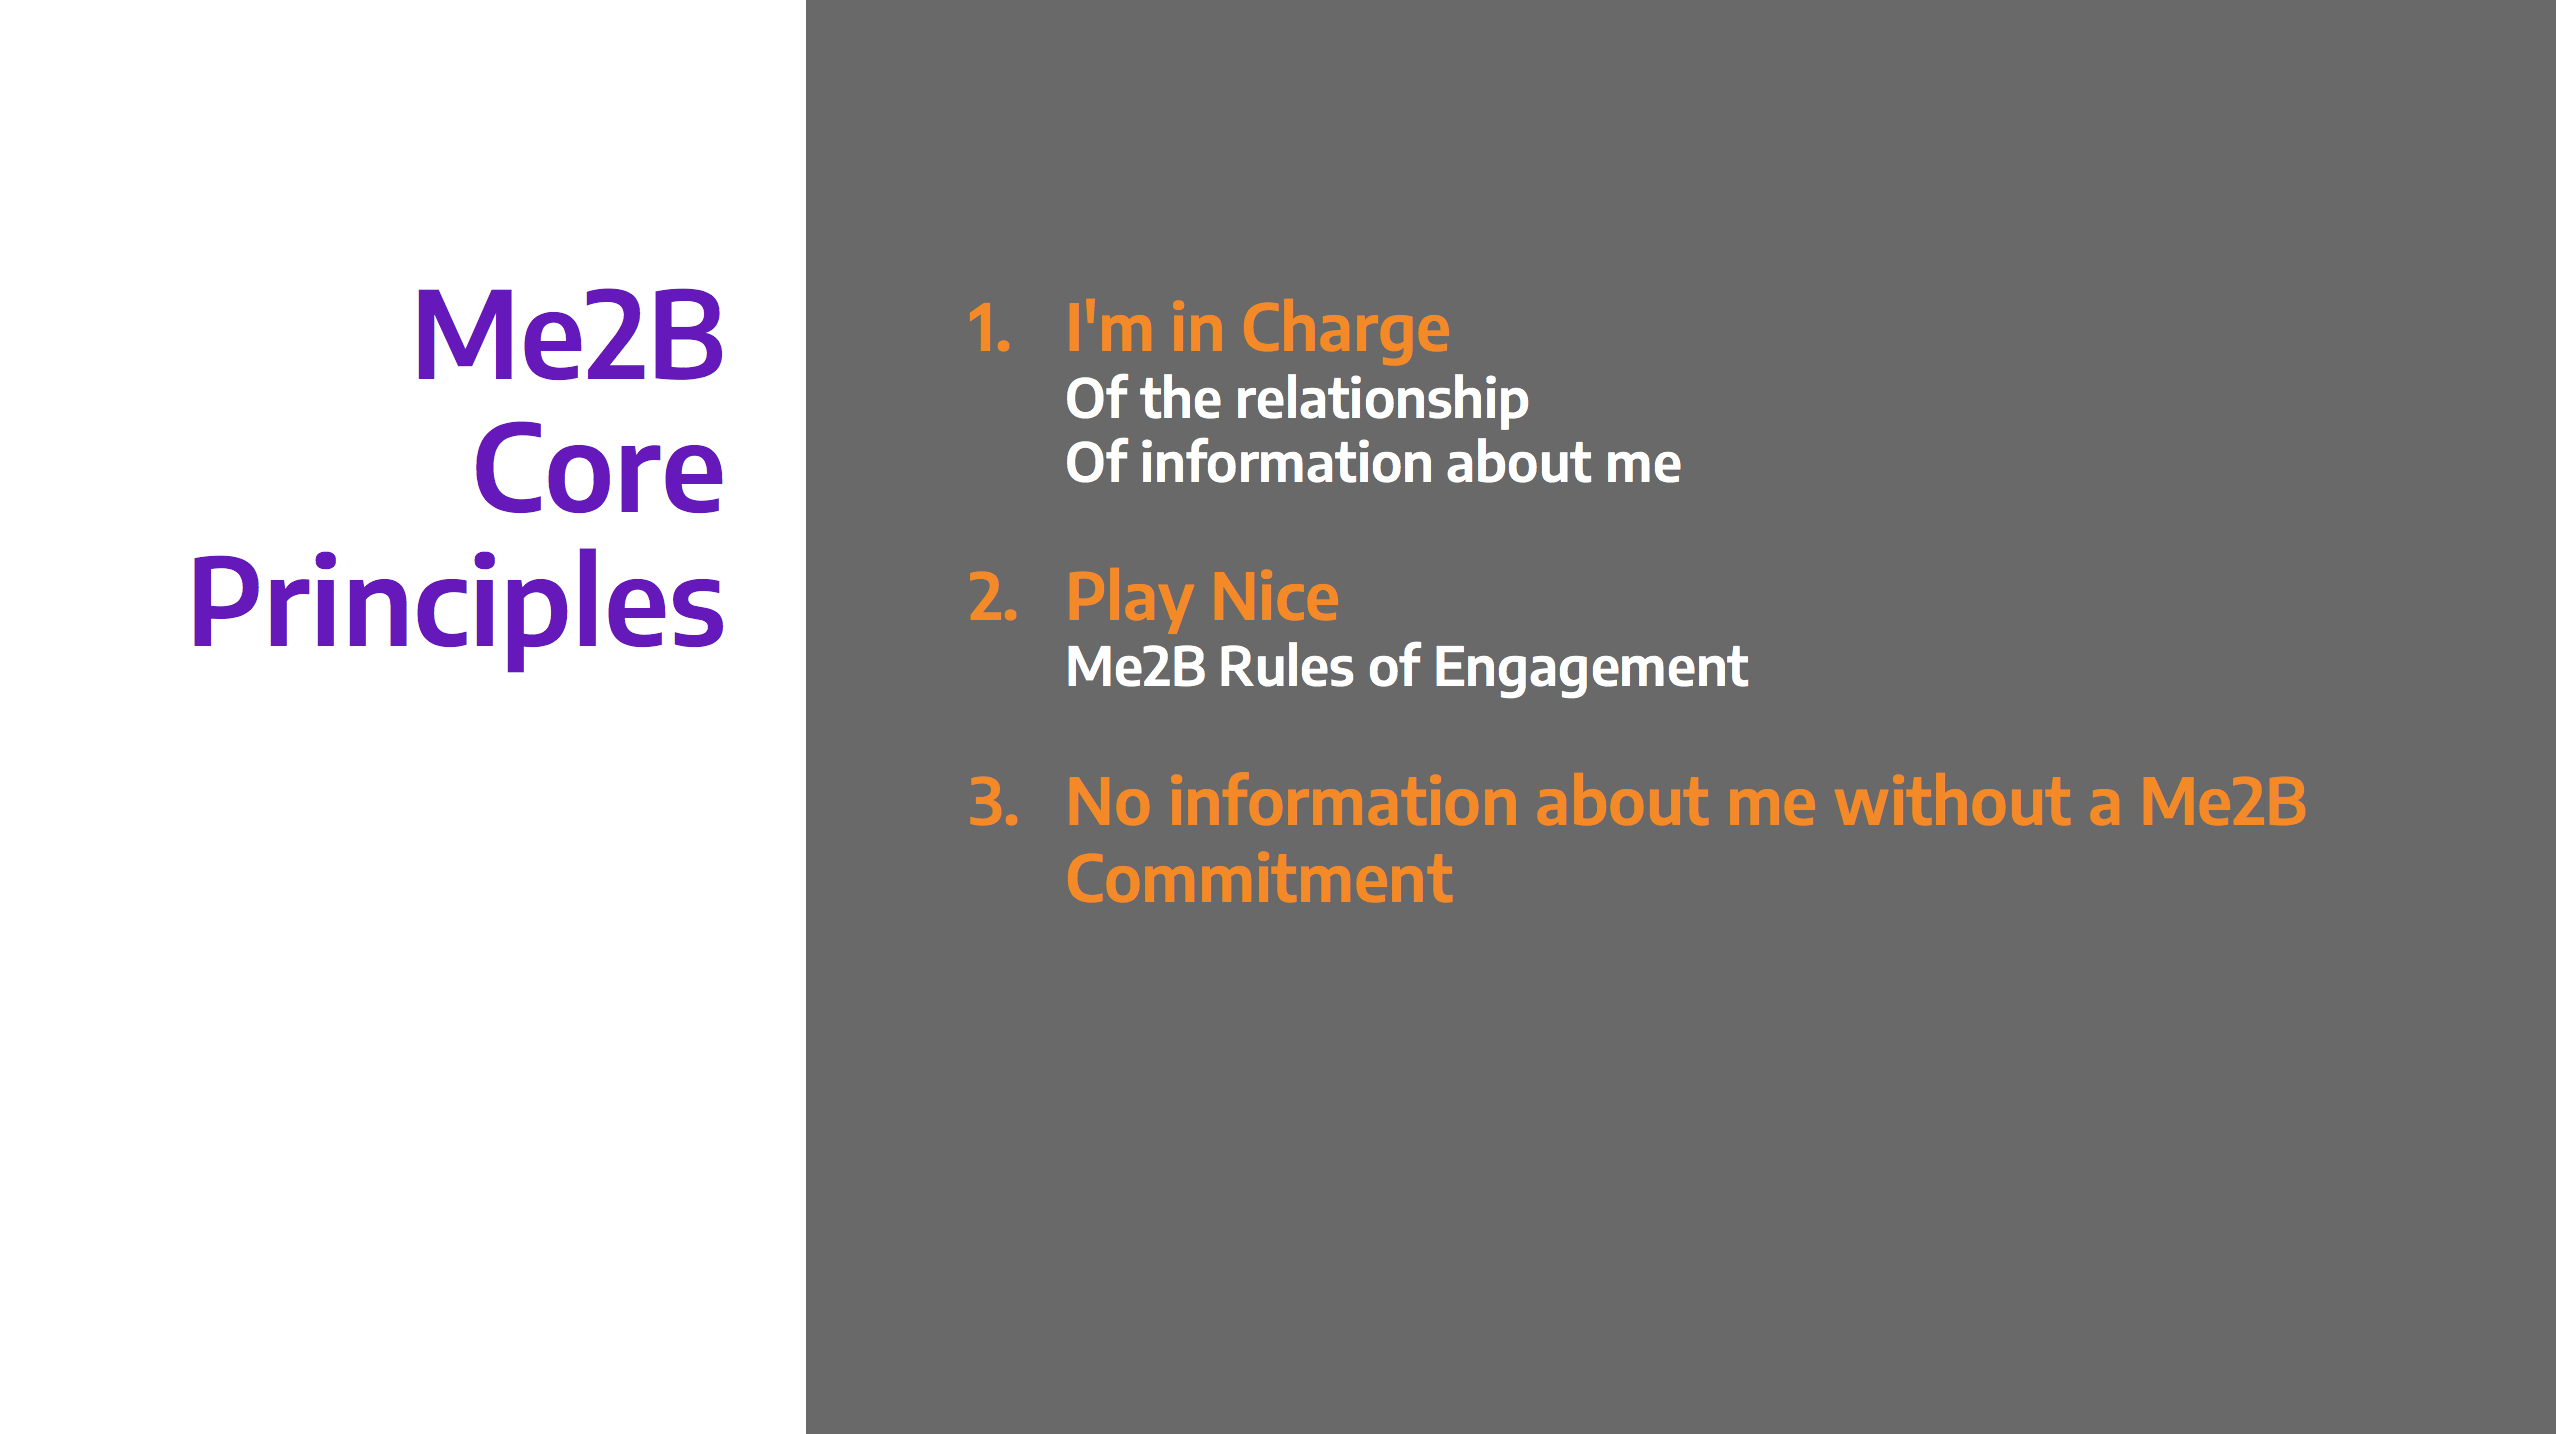 Me2B Core Principles graphic